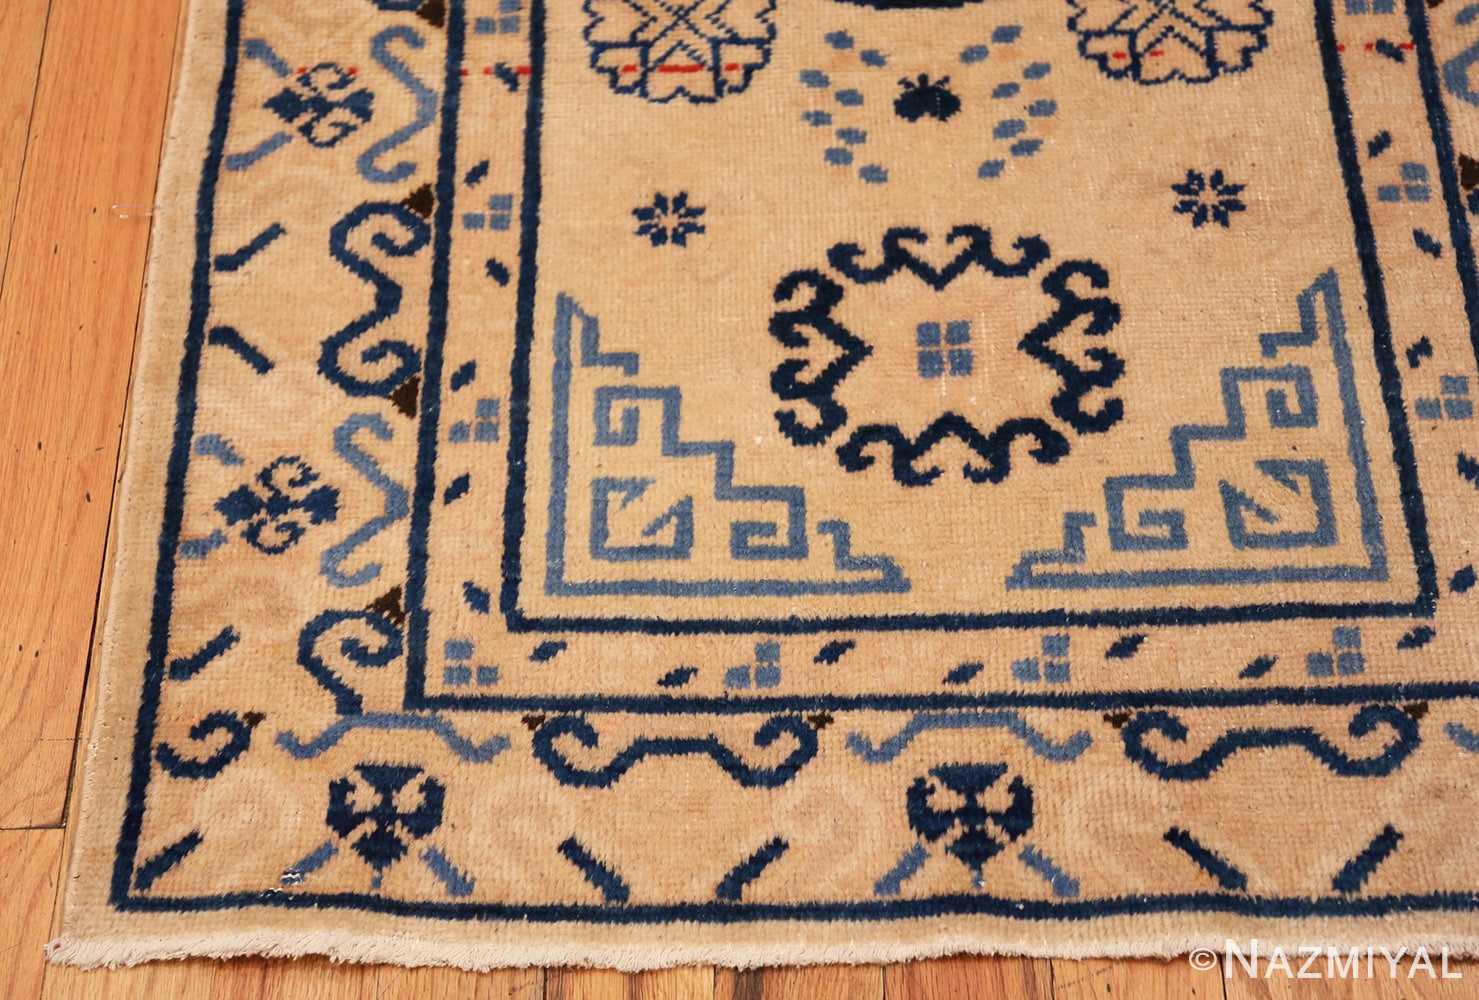 Corner Decorative Ivory and Blue Antique Khotan runner rug 42193 by Nazmiyal